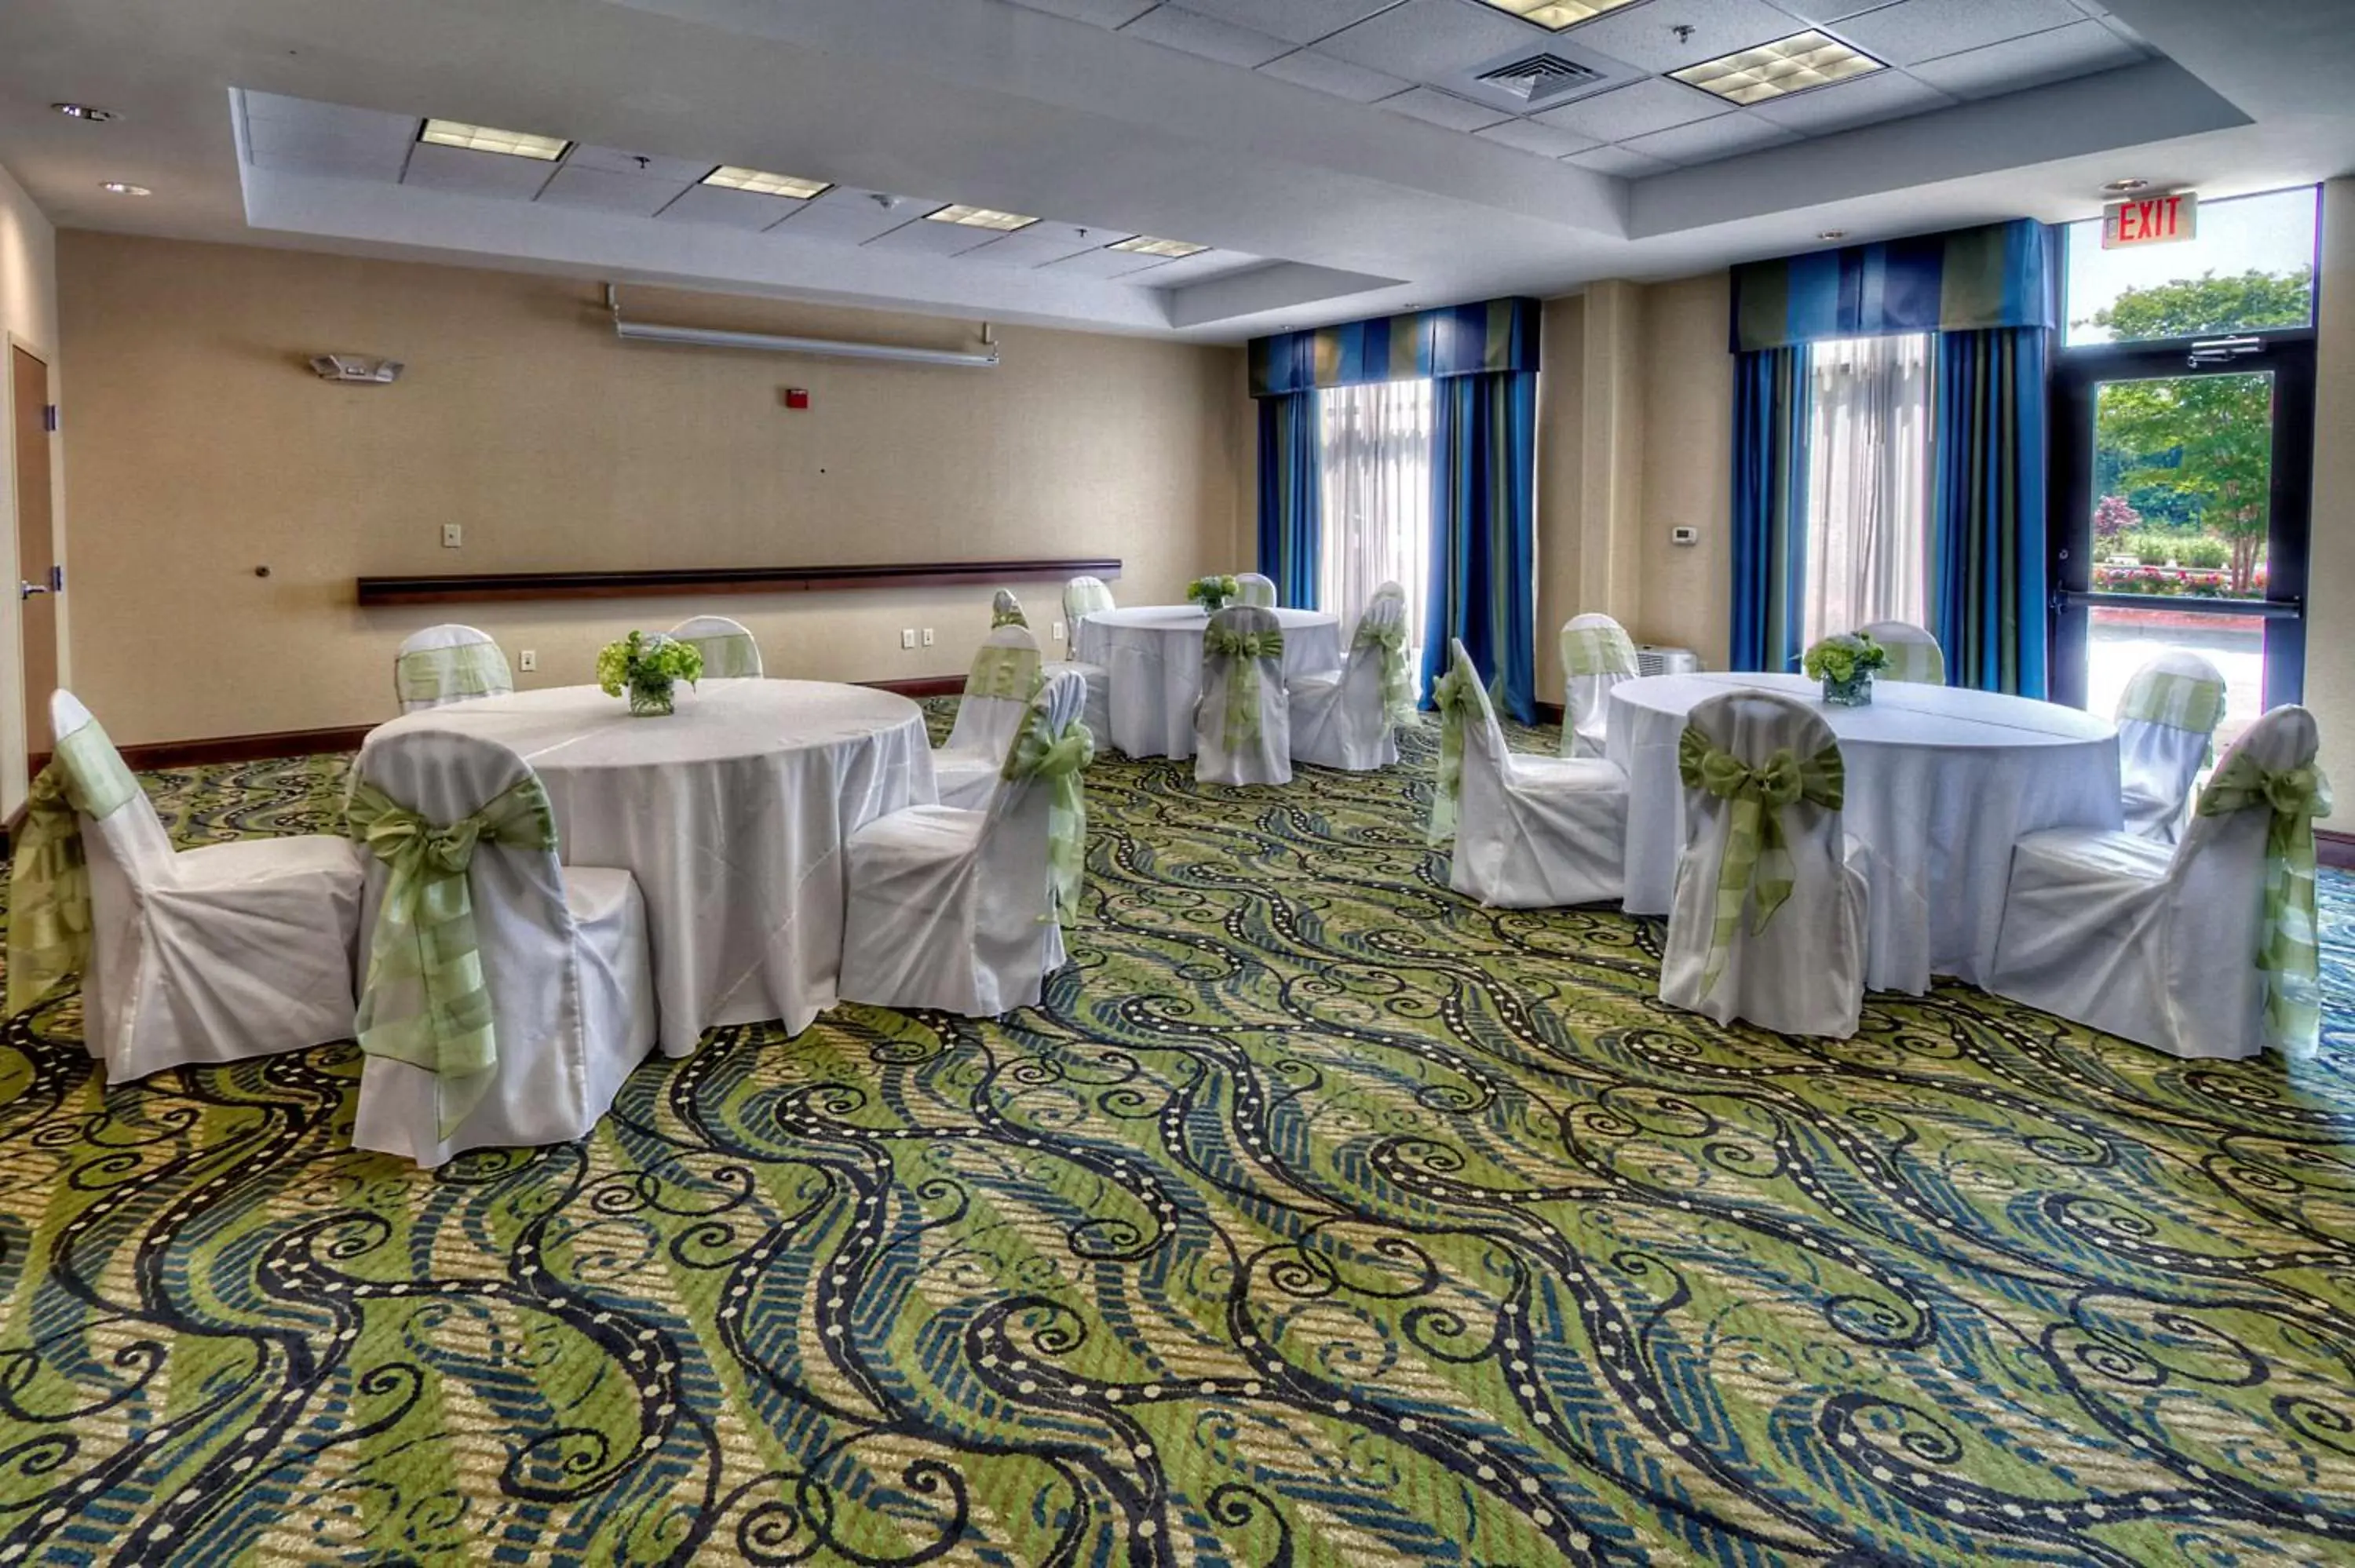 Meeting/conference room, Banquet Facilities in Hampton Inn Roanoke Rapids